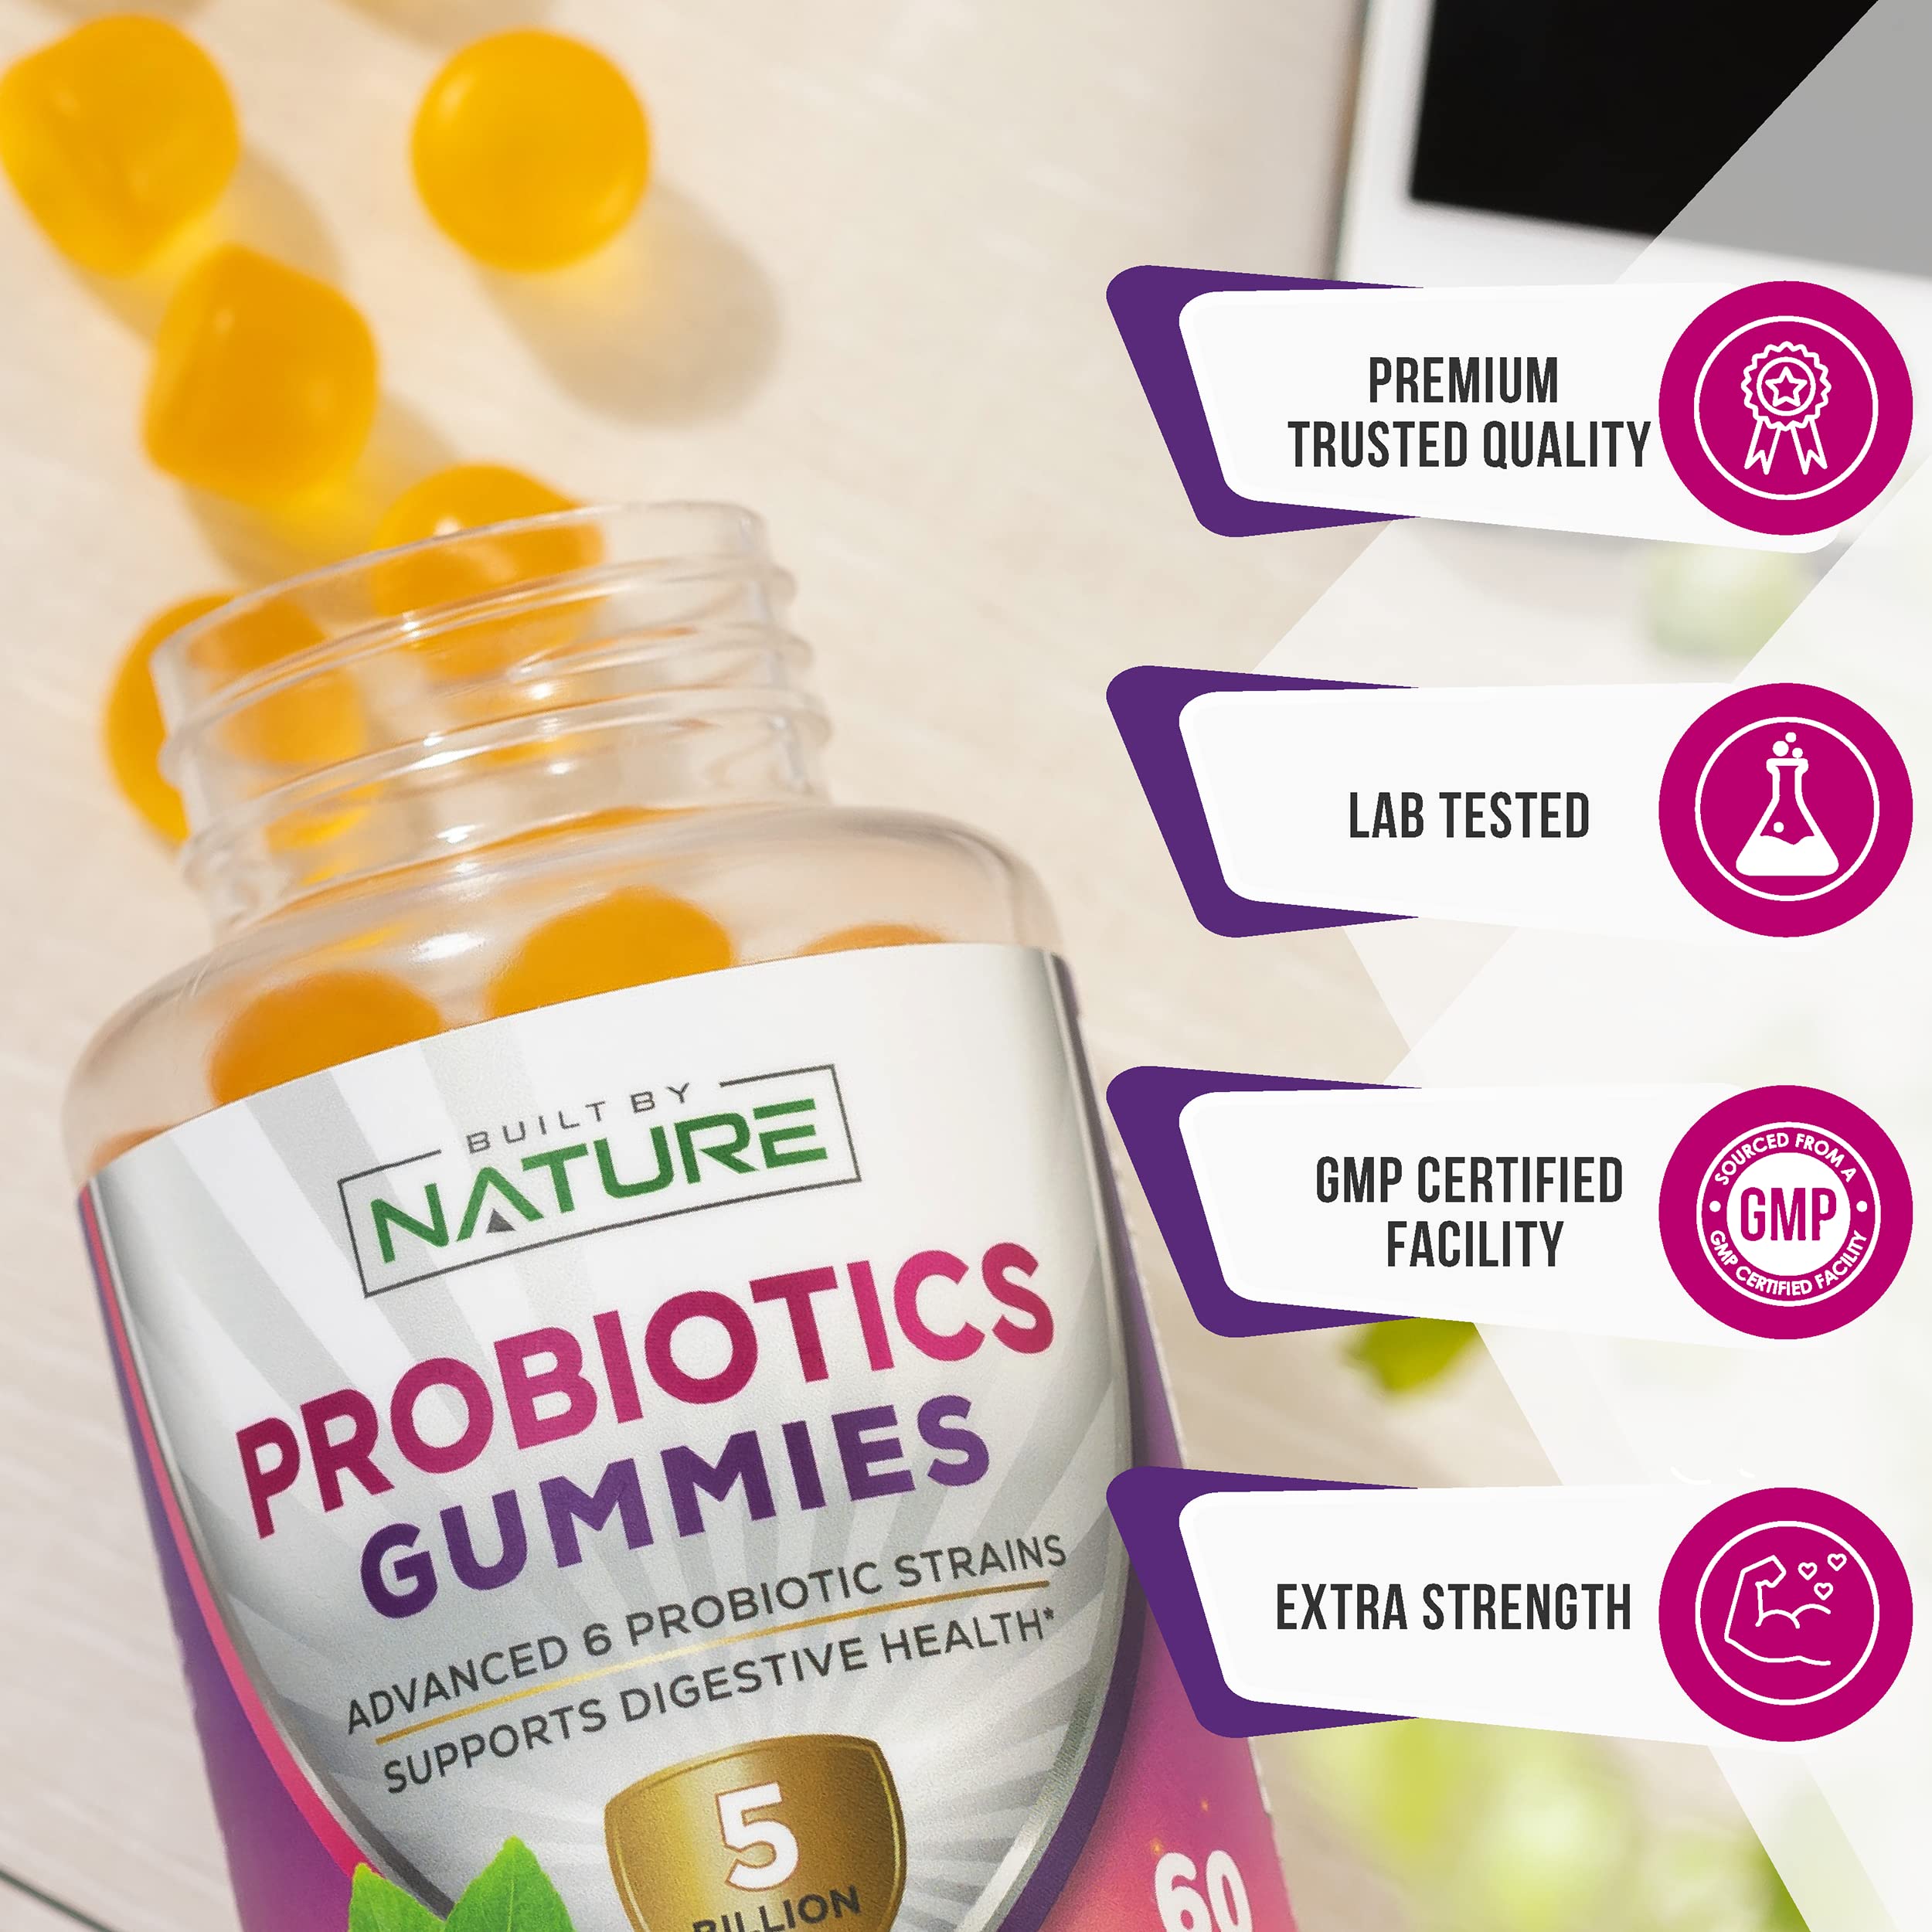 Probiotic Gummies – 5 Billion CFUs for Digestive & Gut Health - Reduces Occasional Bloating & Minor Abdominal Discomfort - Probiotic Gummy for Women & Kids - Natural Orange Flavor – 60 Gummies